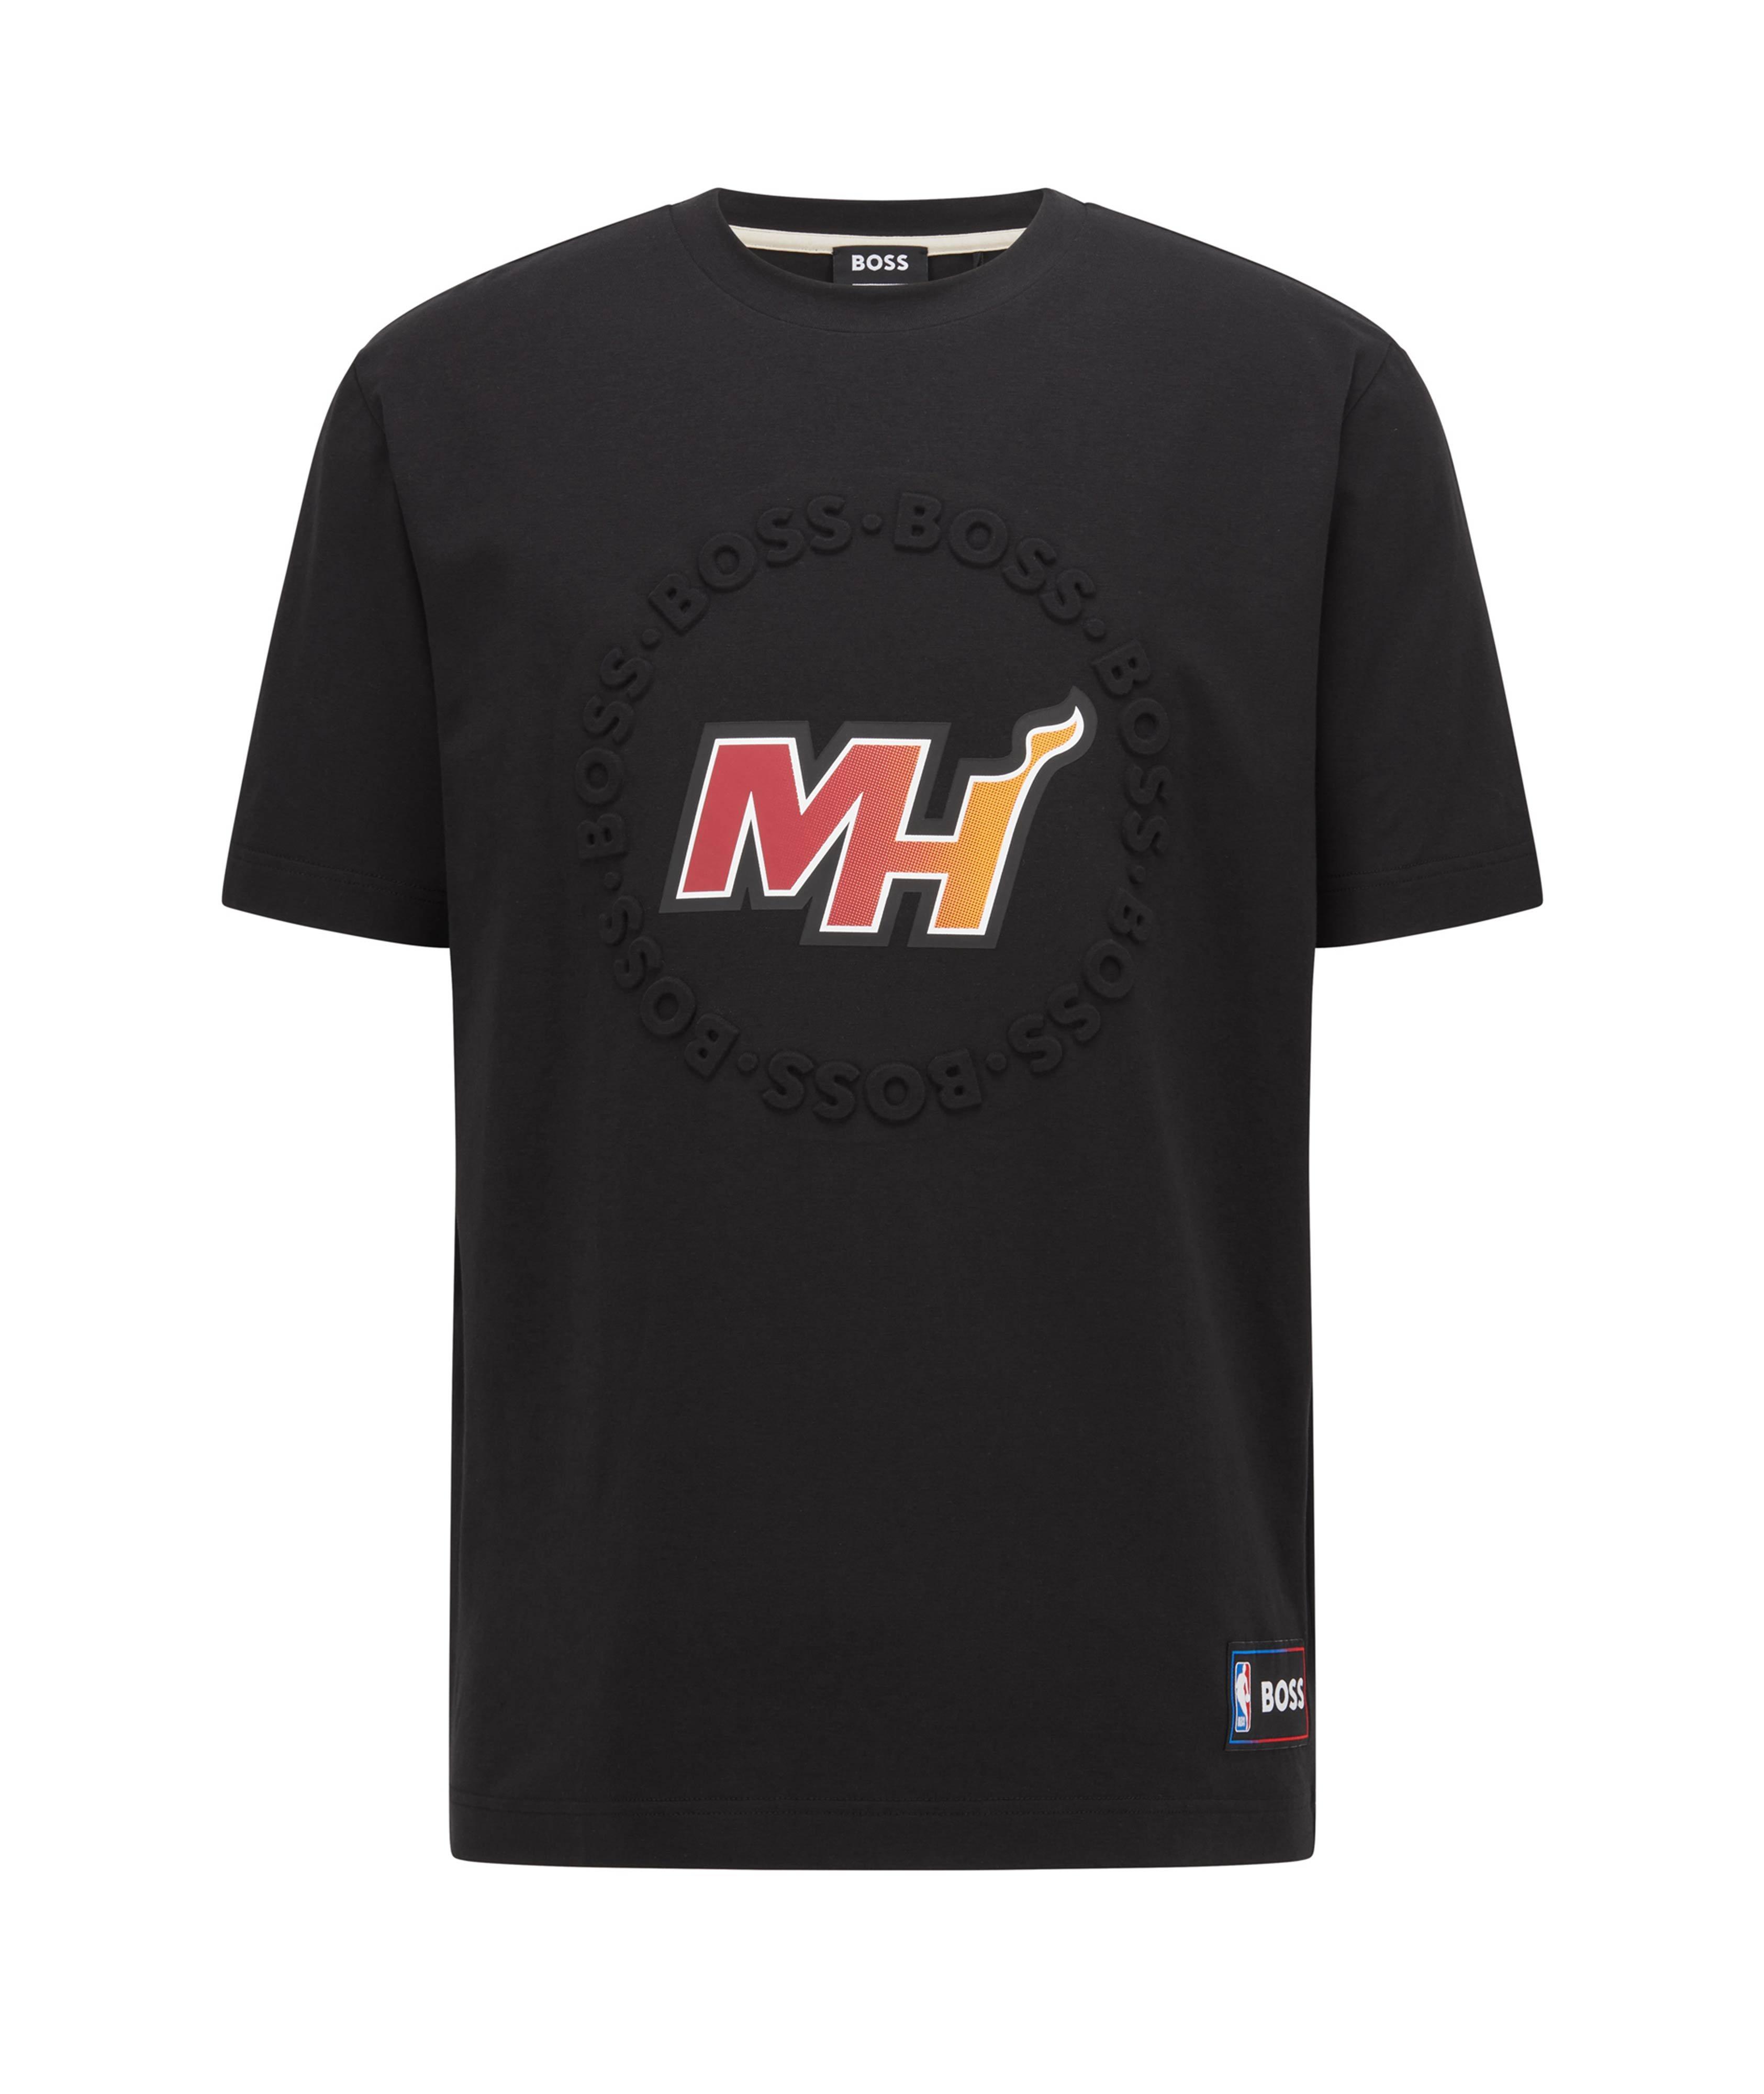 T-shirt avec logo du Heat, collection NBA image 0